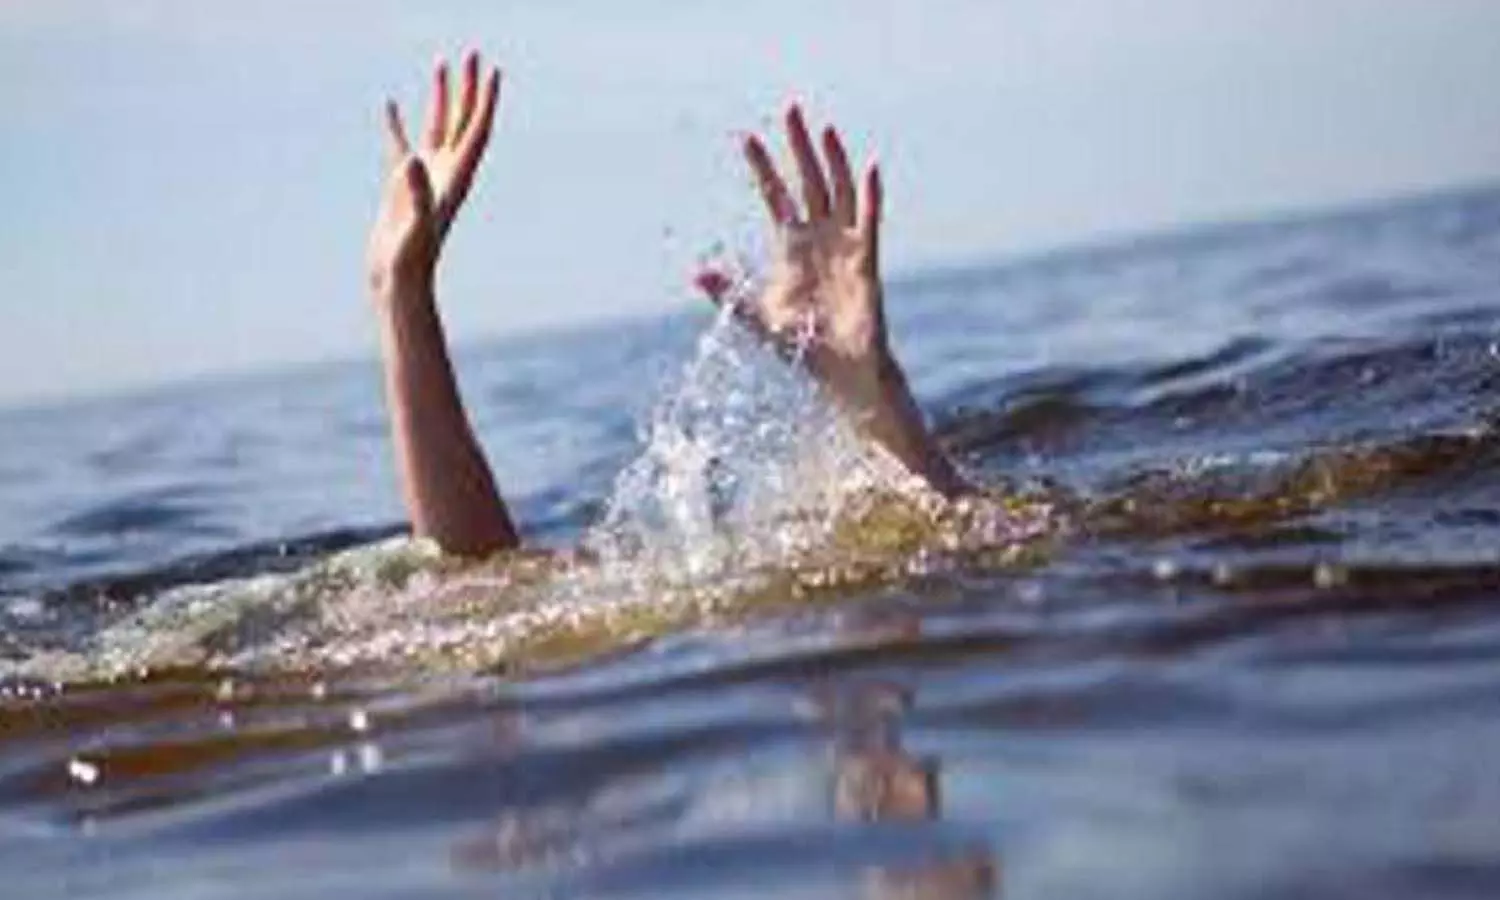 Man jumped in Gomti river